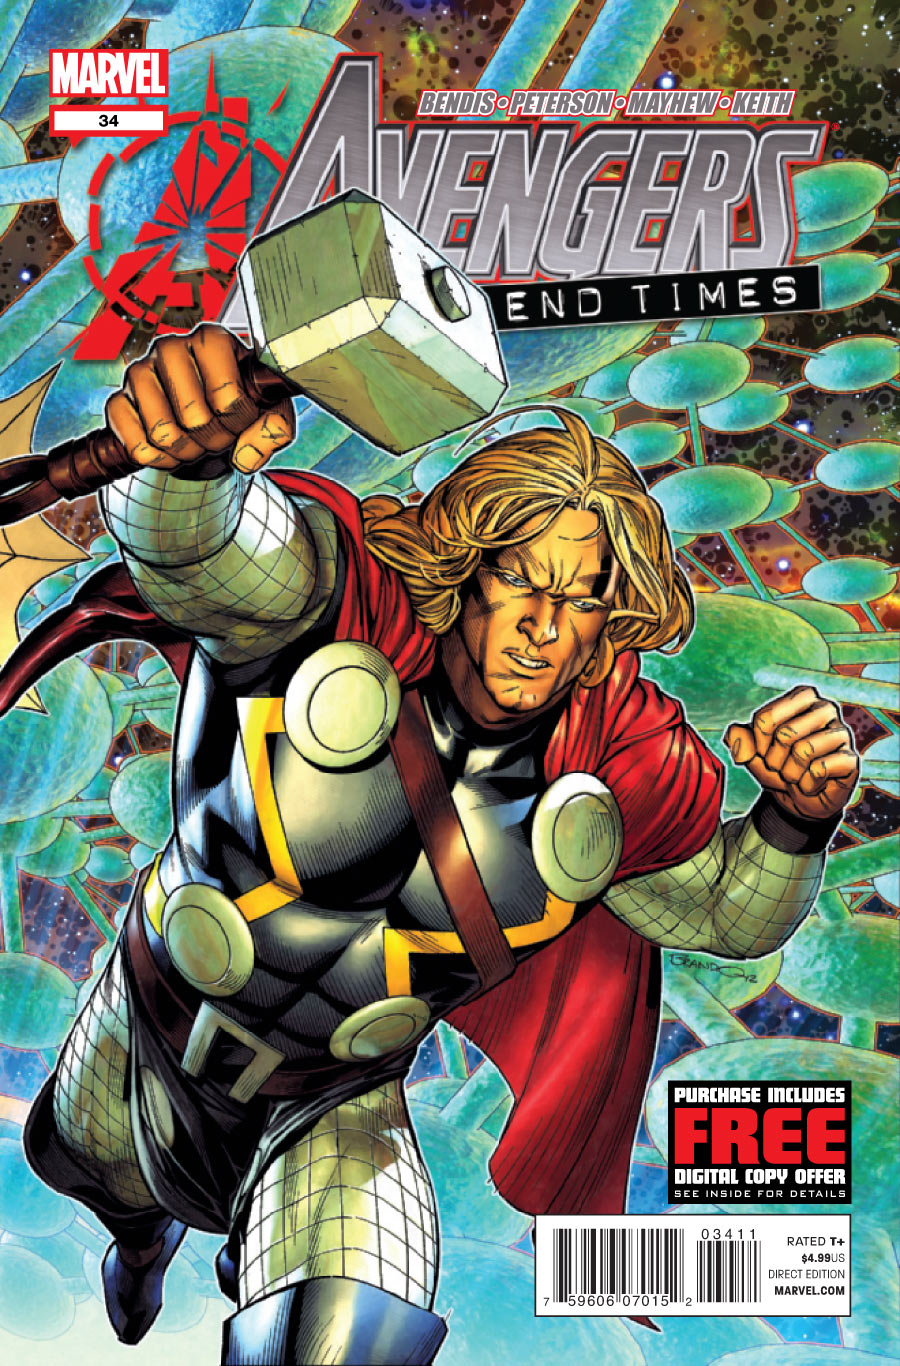 Avengers Issue 34